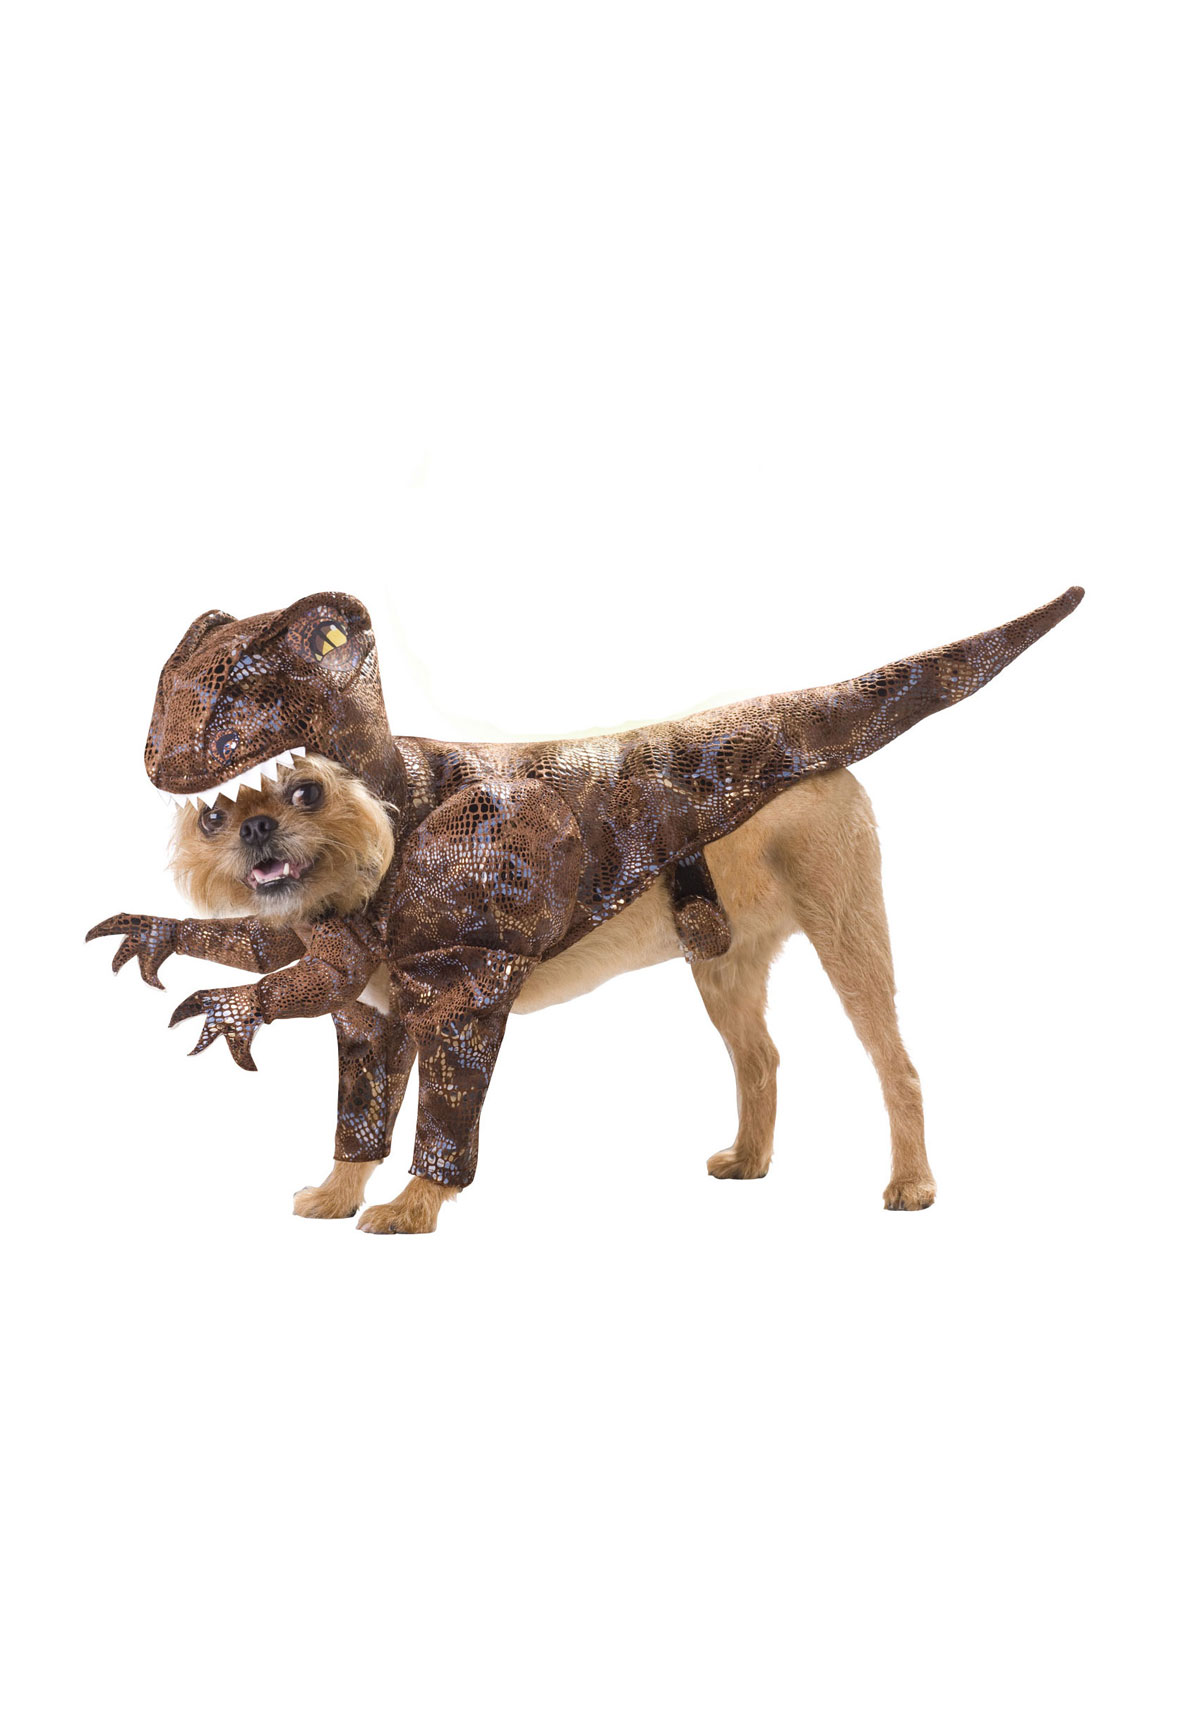 Animal Planet Raptor Dog Costume - Tan/Brown